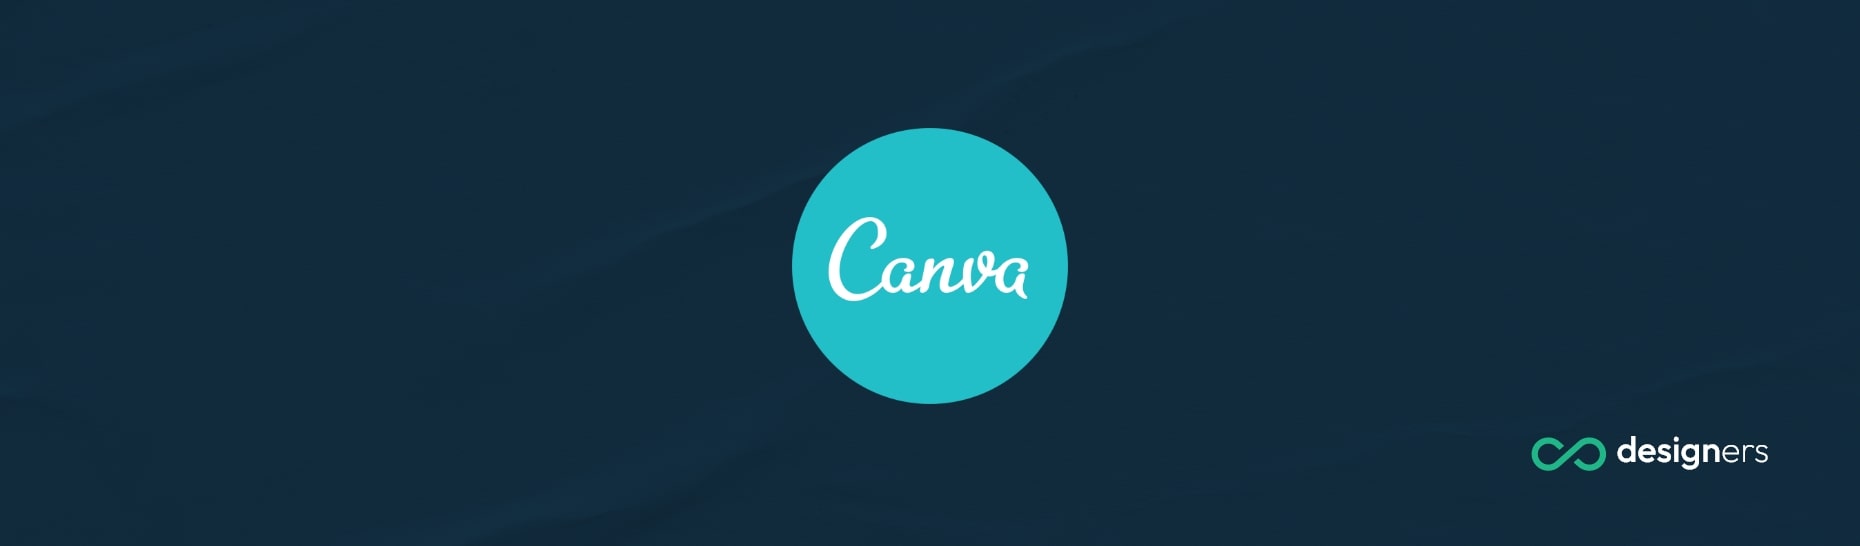 Does Canva Publish Your Designs?